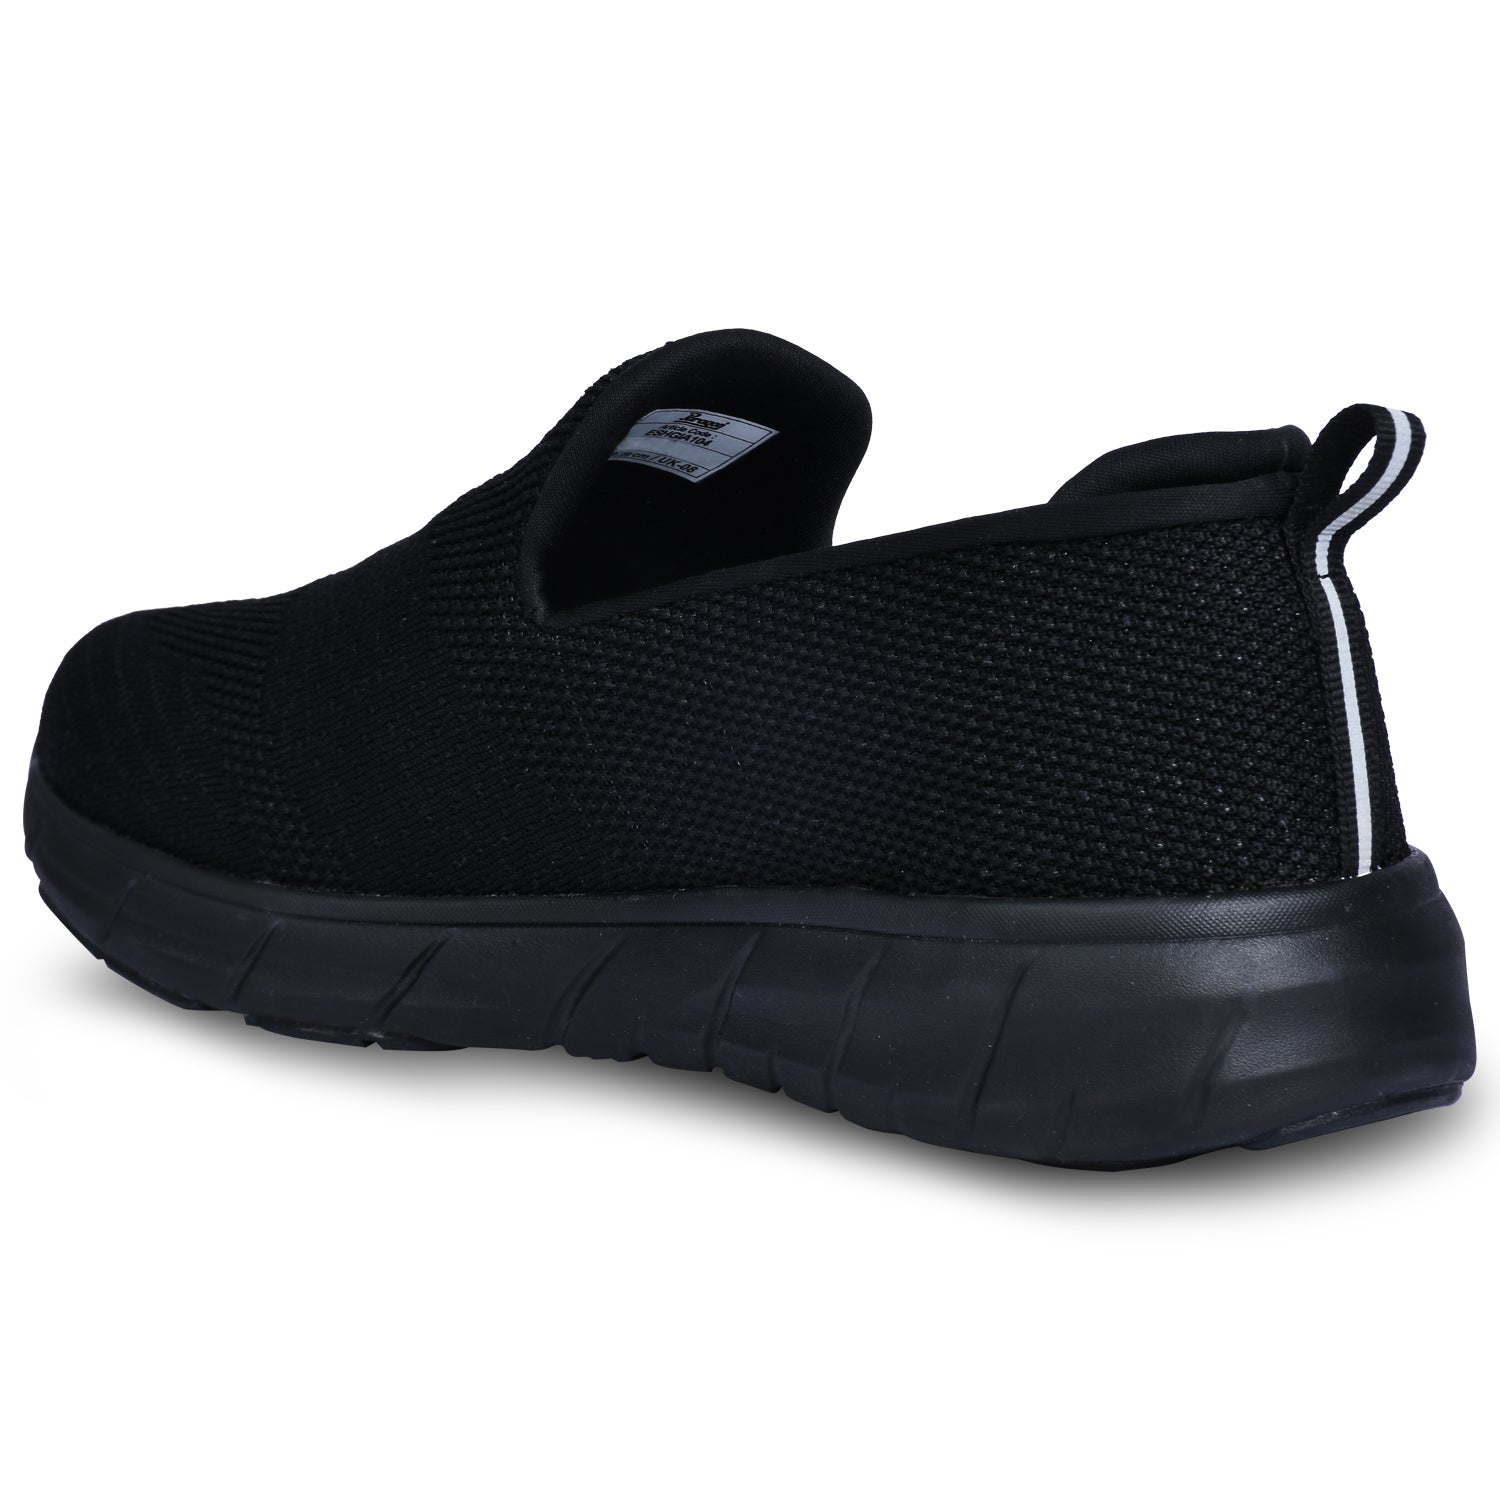 Eeken Black Athleisure Shoes for Men